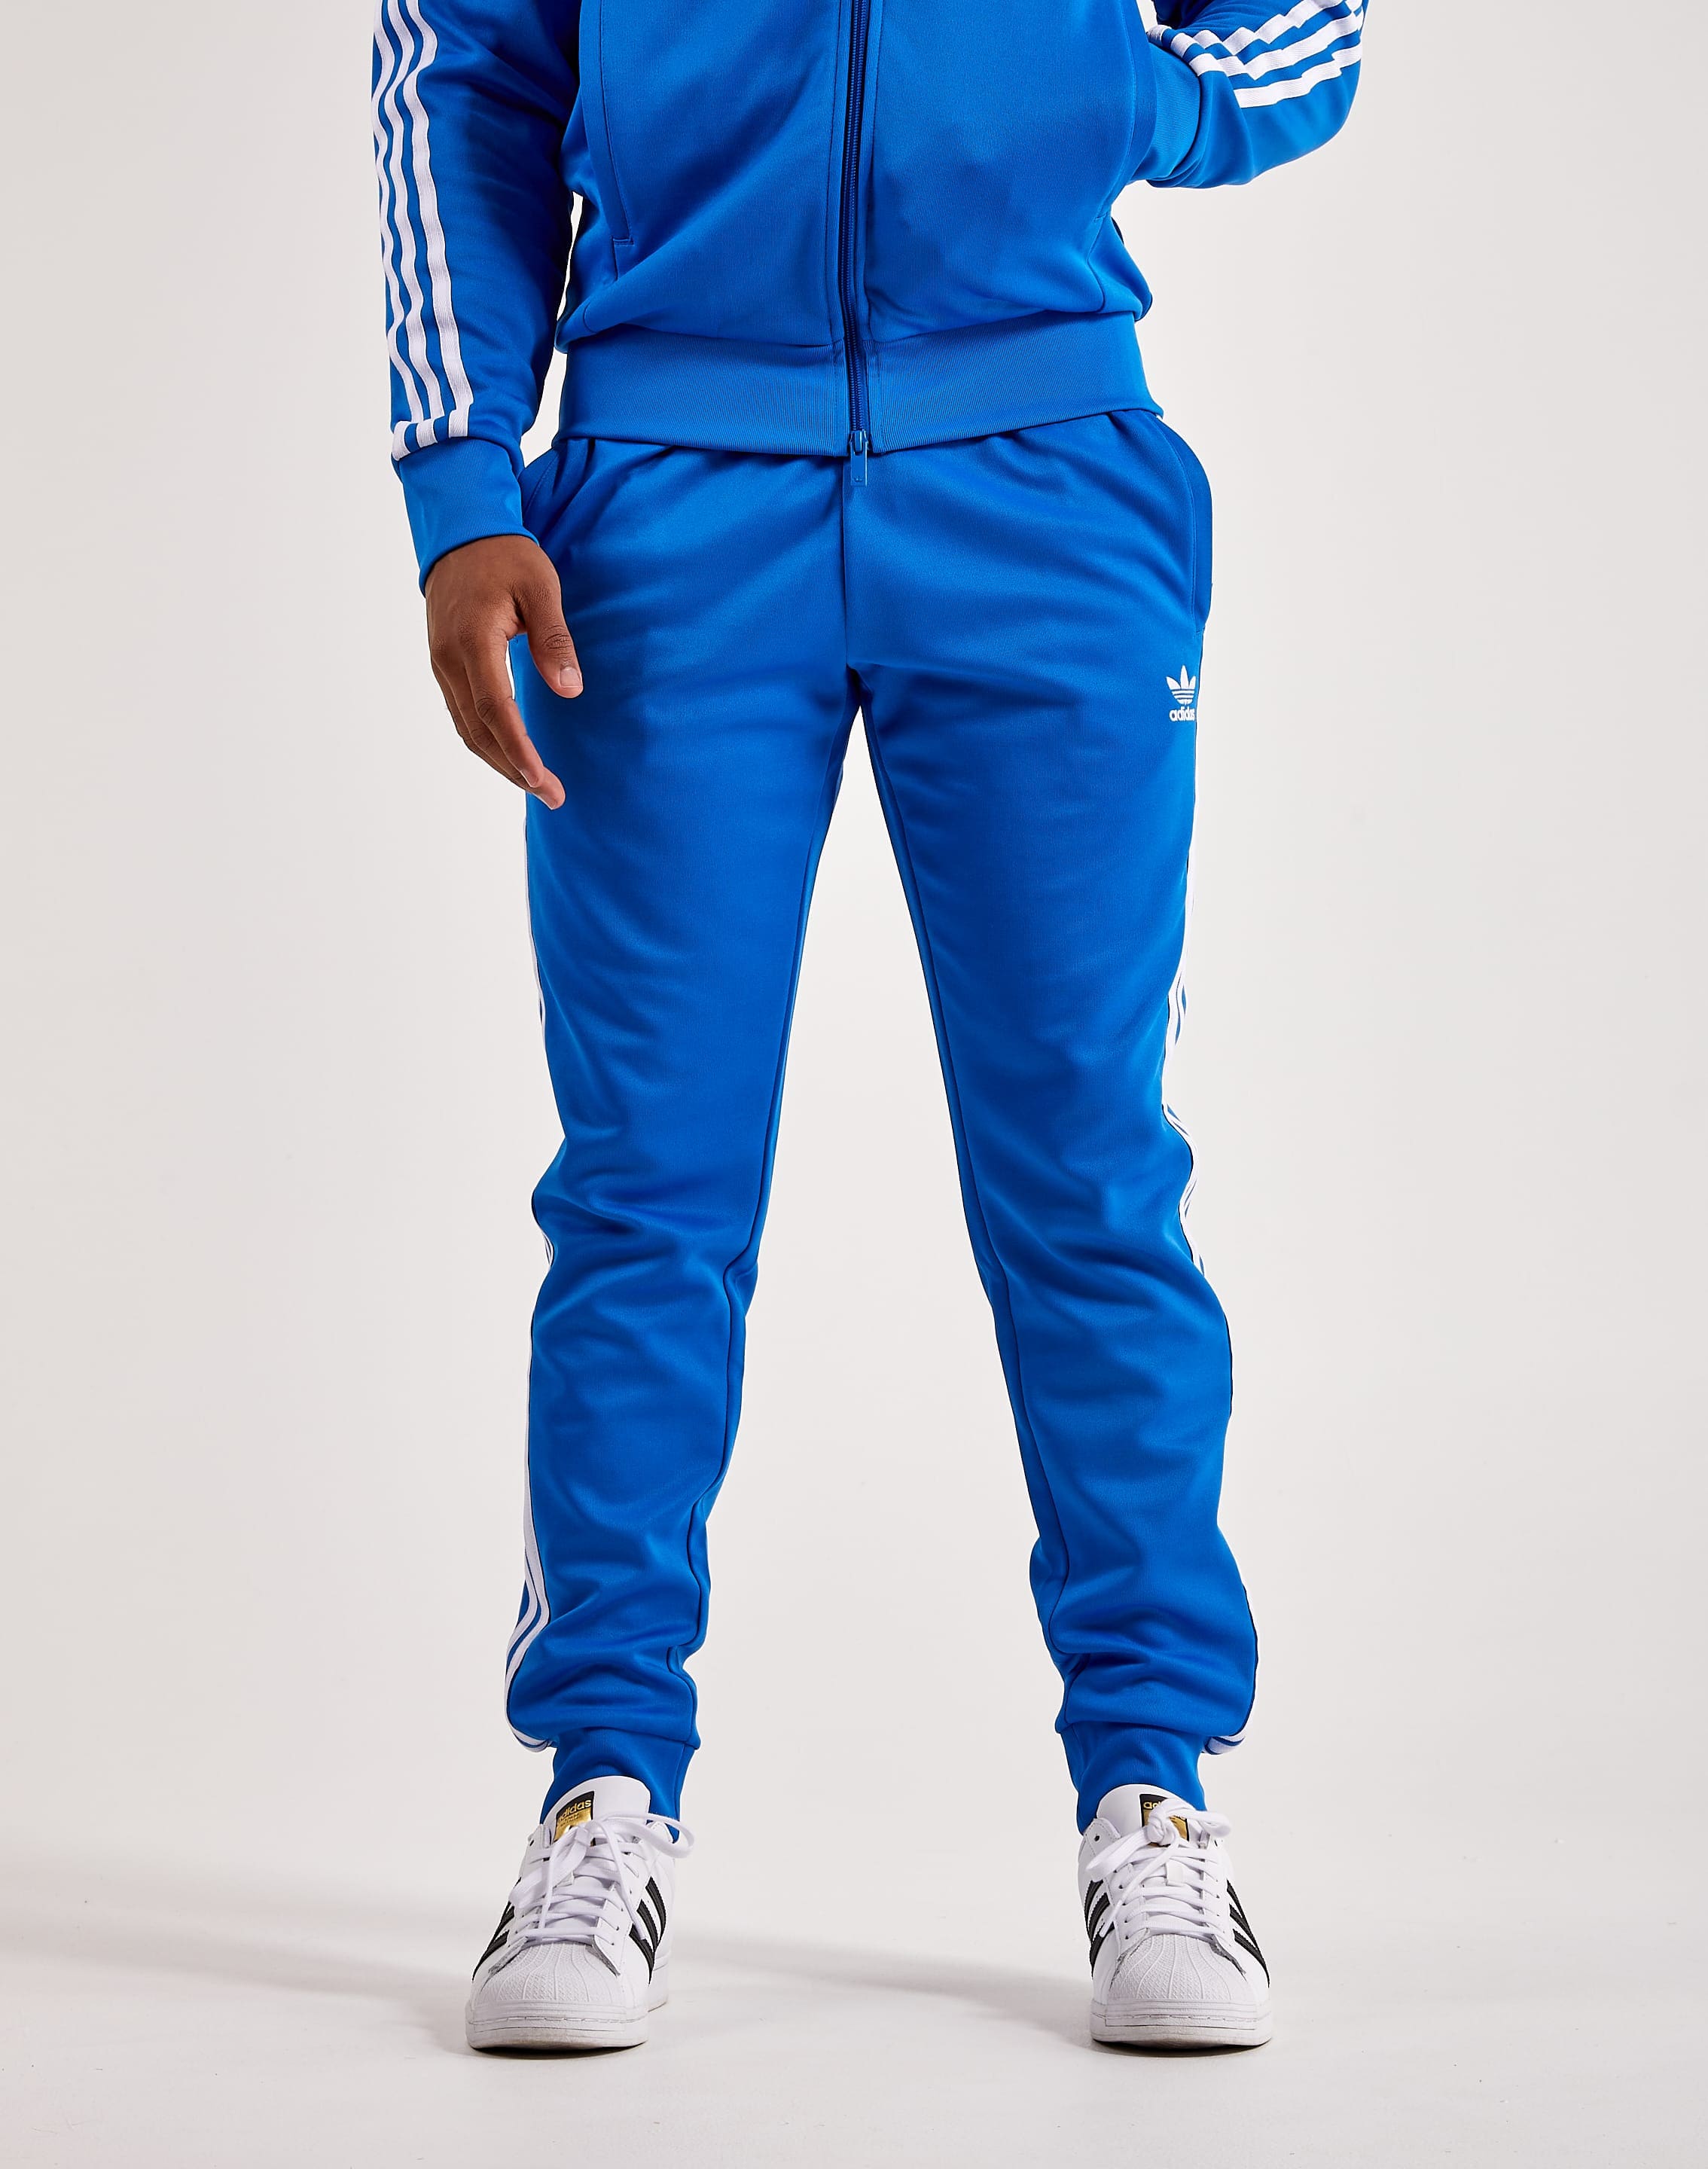 SST Track Pants - Blue, Adidas